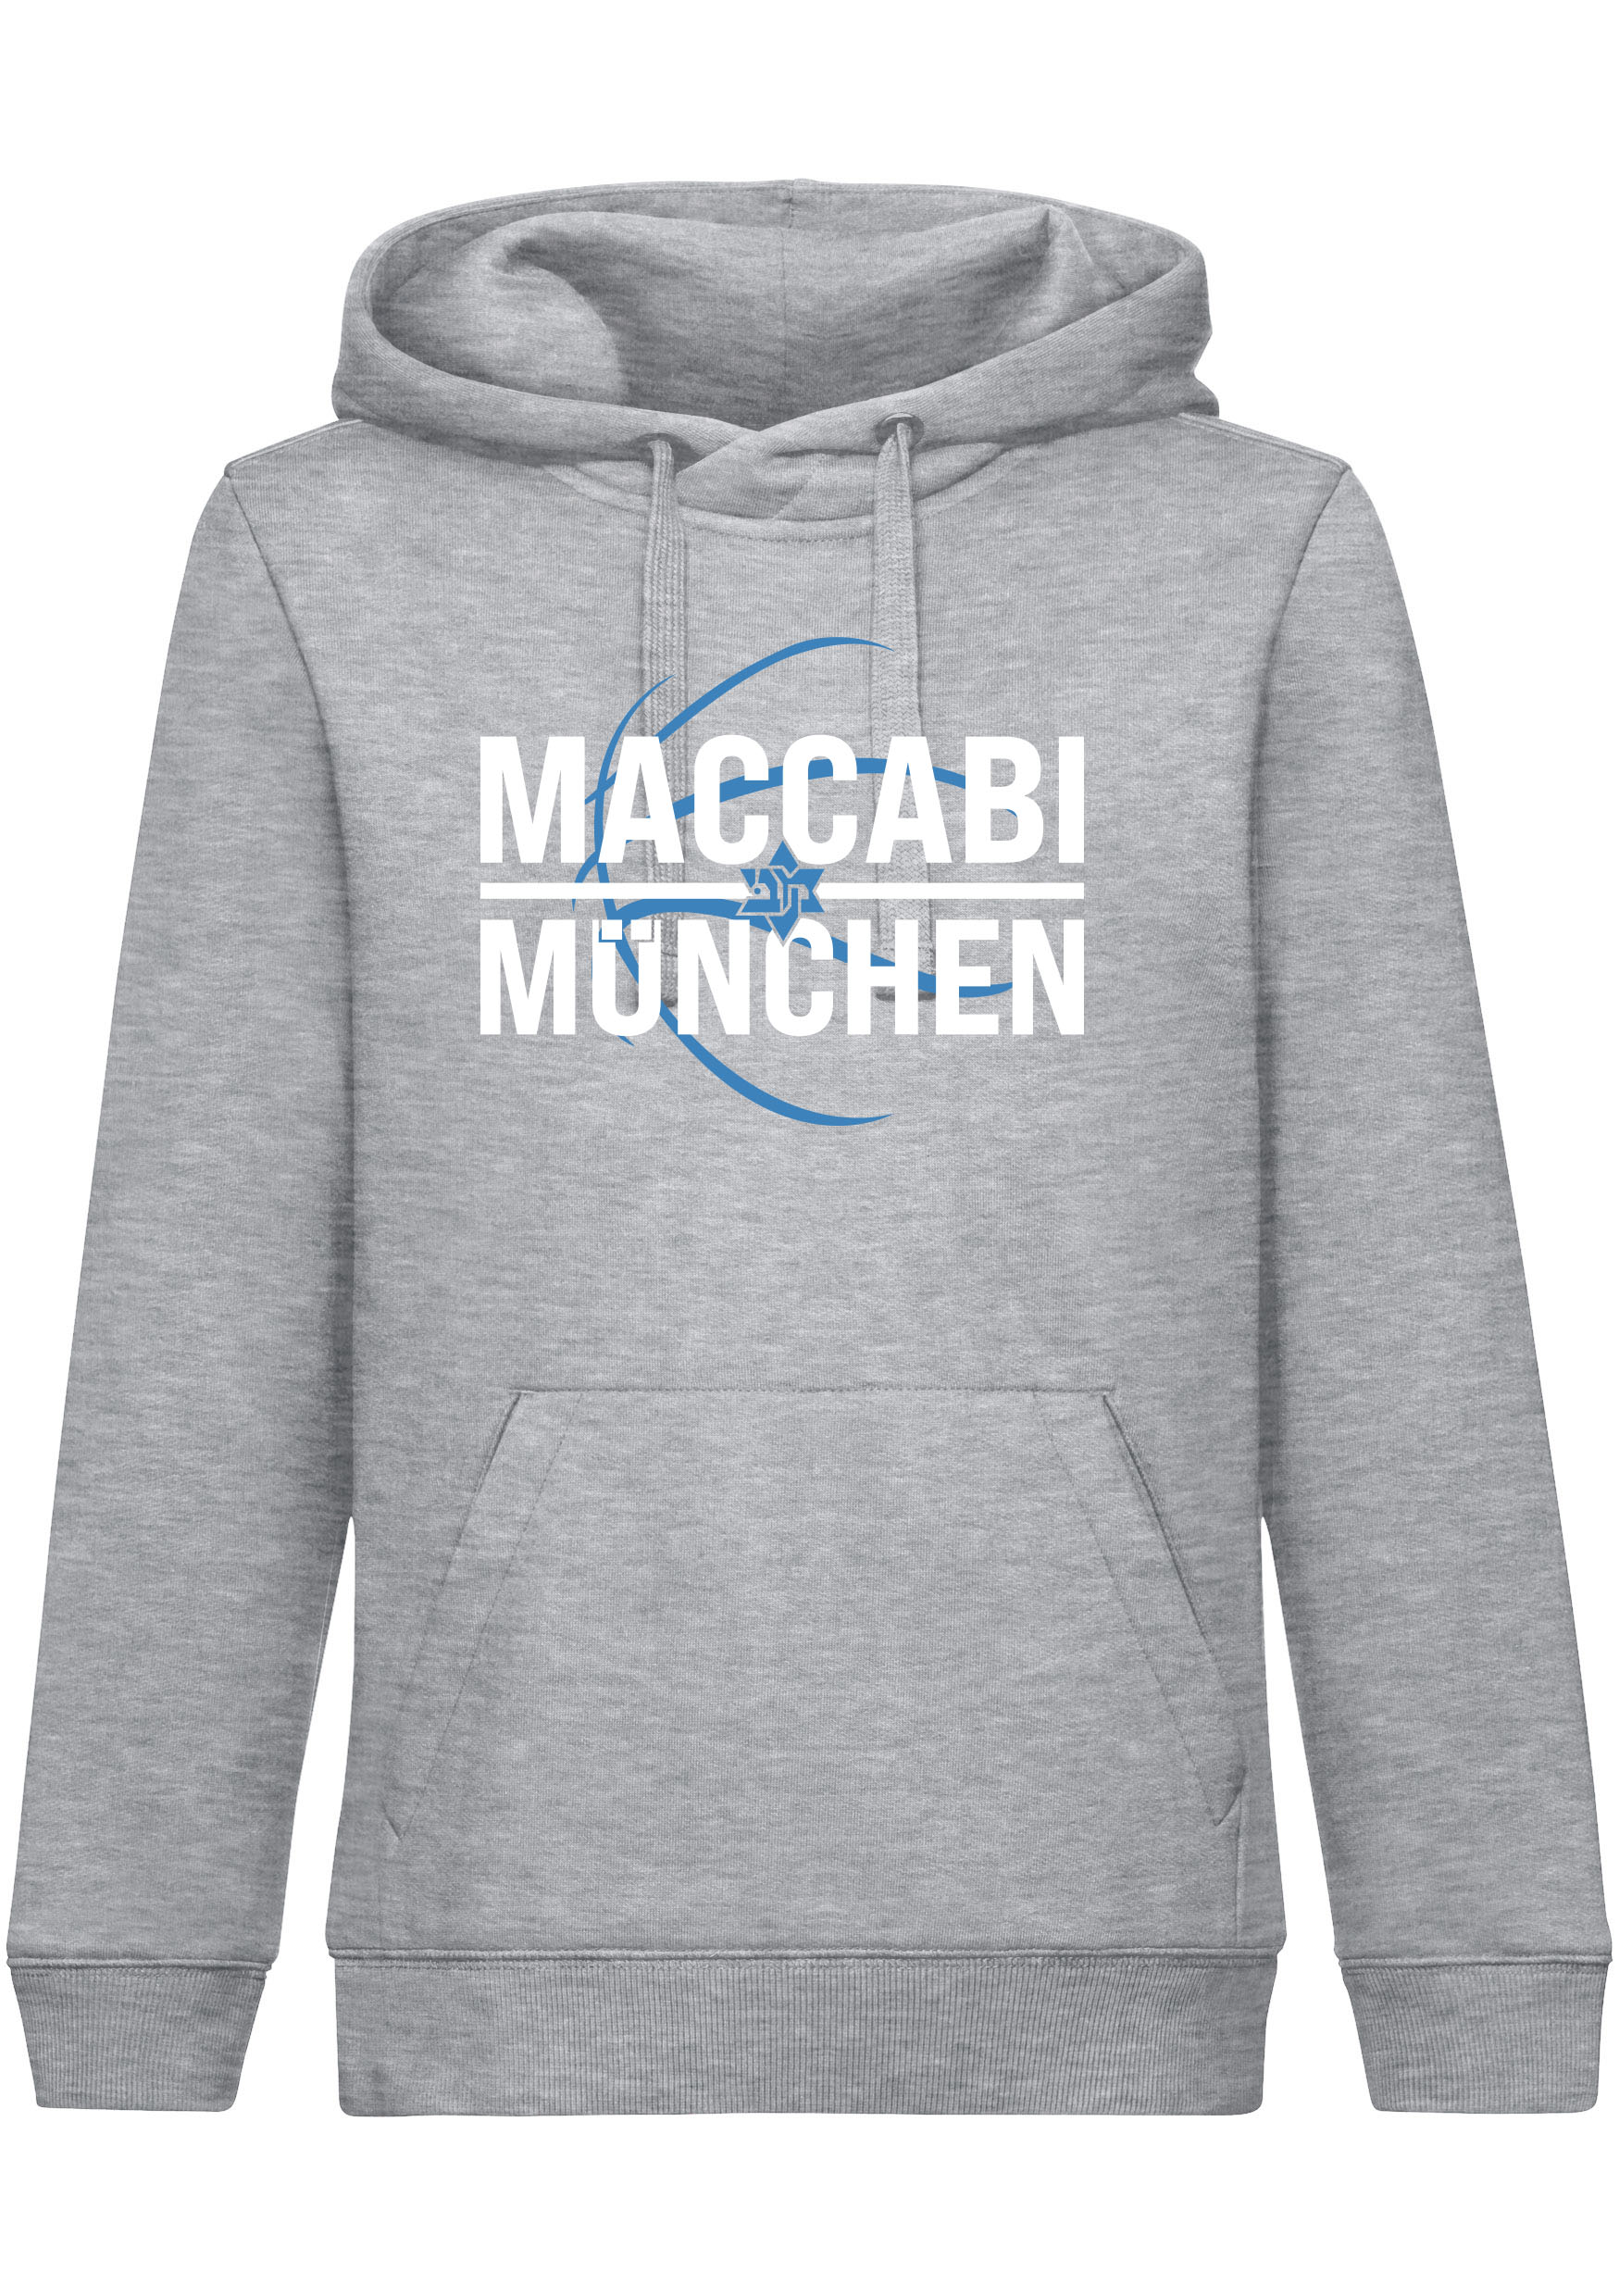 Maccabi München Hoodie Kids